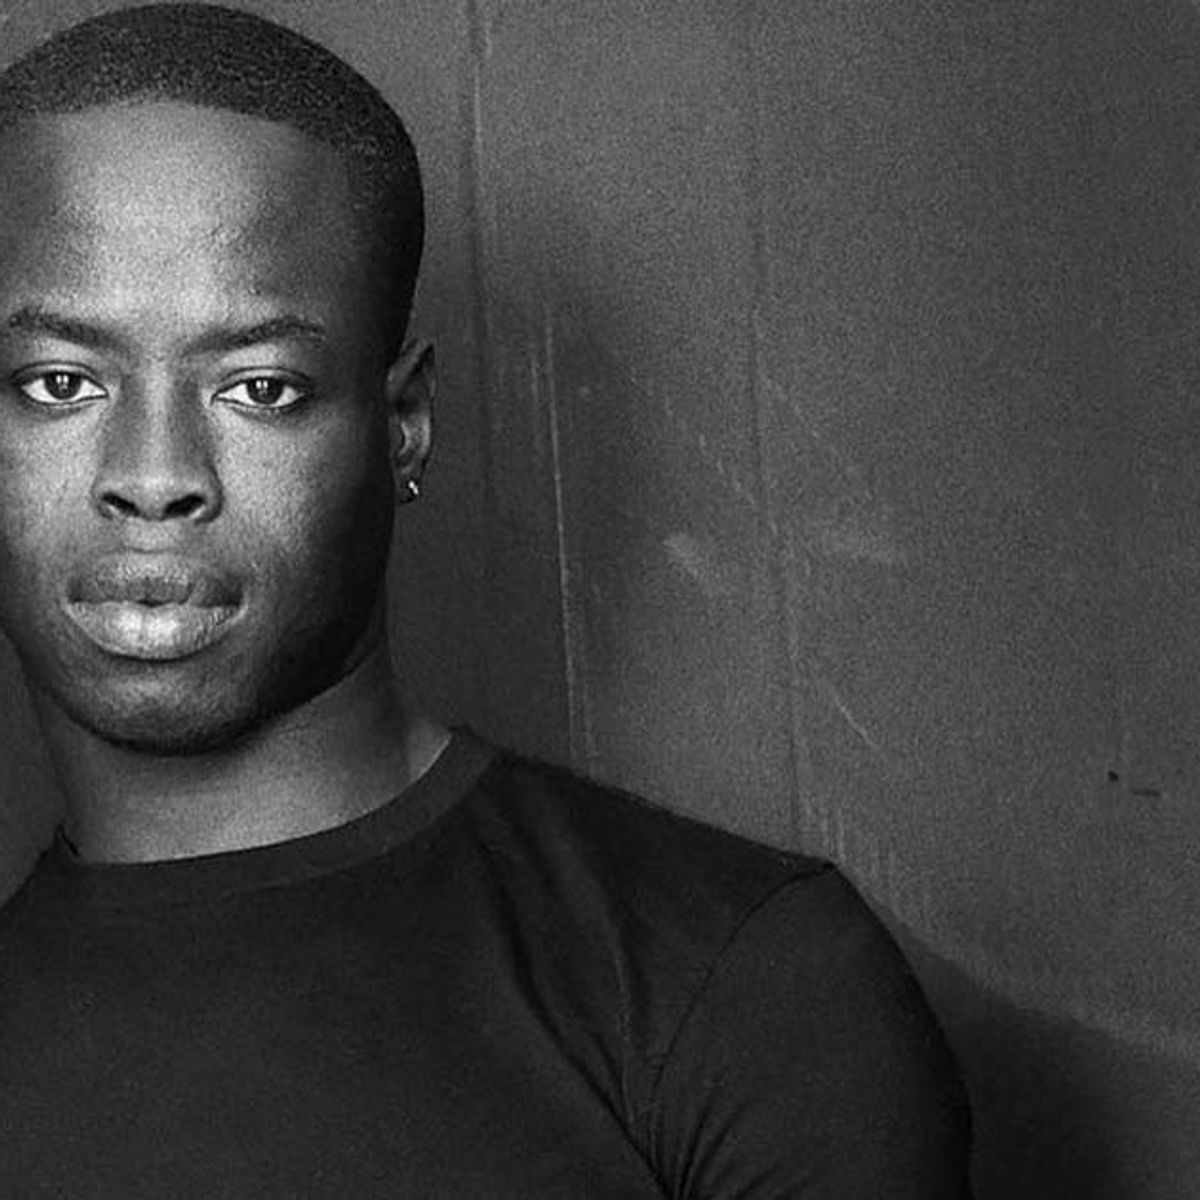 Off-White Appoint Ibrahim Kamara as Art and Image Director - Sneaker Freaker